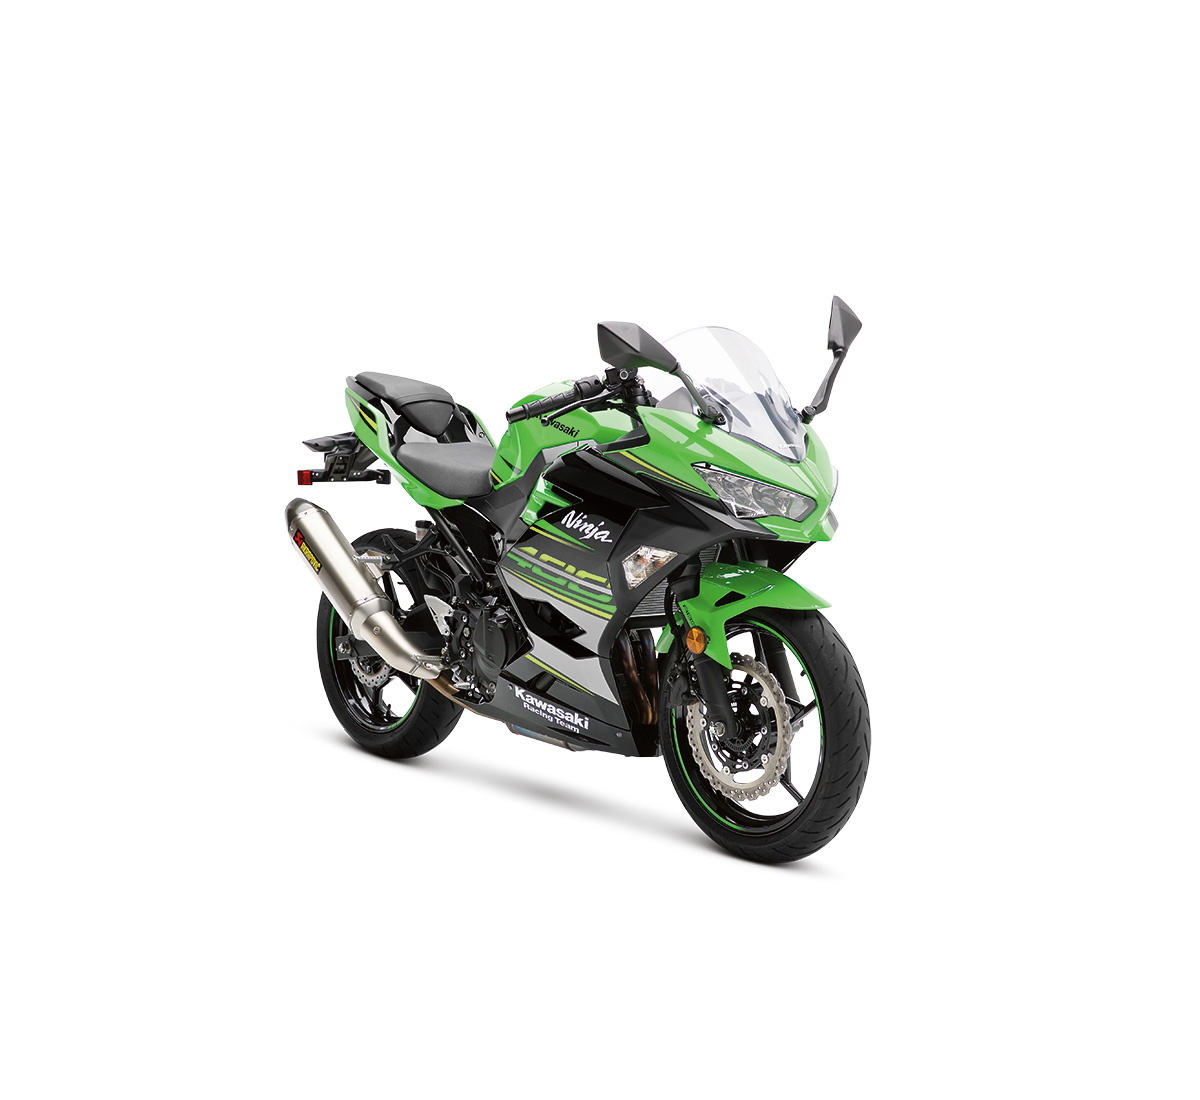 YOSAYUSA Motorcycle NINJA 400 Exhaust System 2” Universal Muffler Tail Pipe Slip On Connect Mid Link Tube Fits For Kawasaki Ninja 400 Z400 2017 2018 2019 2020 